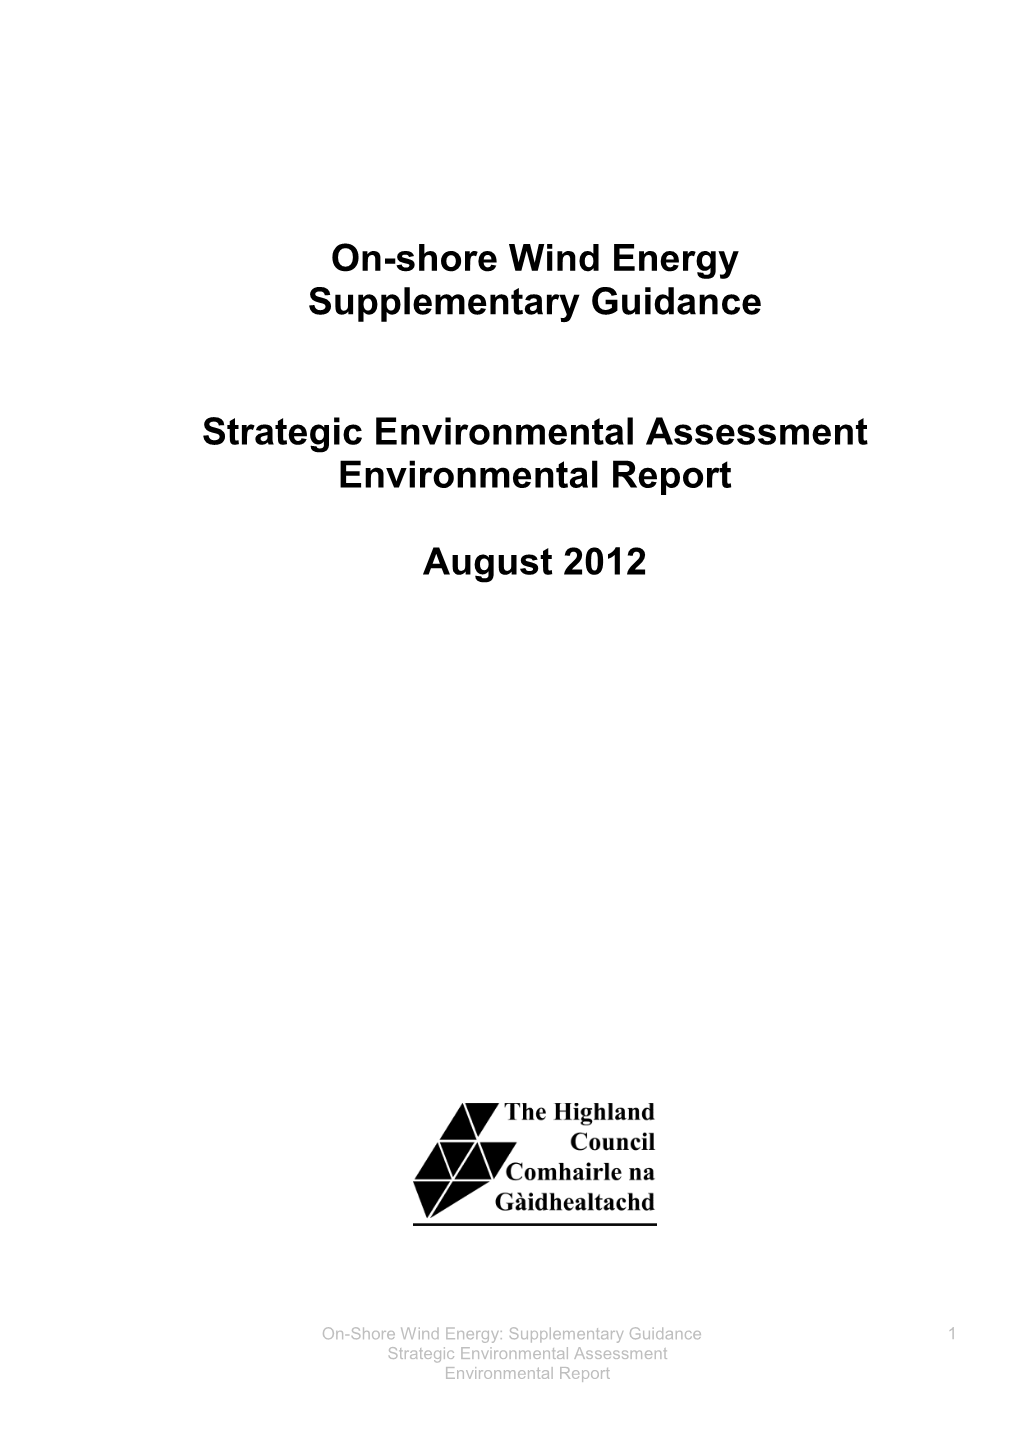 Strategic Environmental Assessment, PDF 3.56 MB